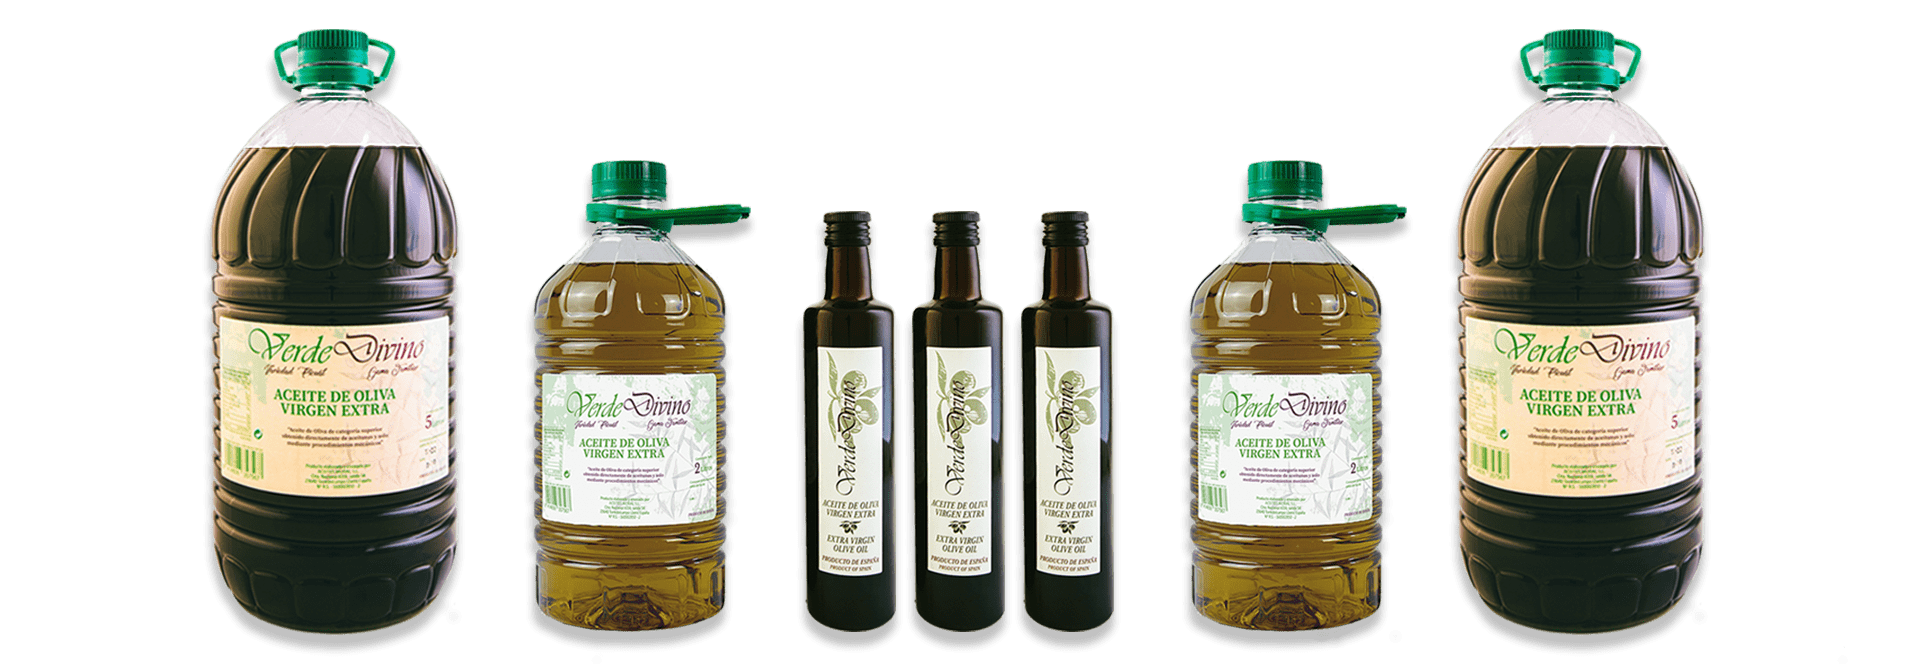 Gamme de carafes d'huile d'olive extra vierge Verde Divino